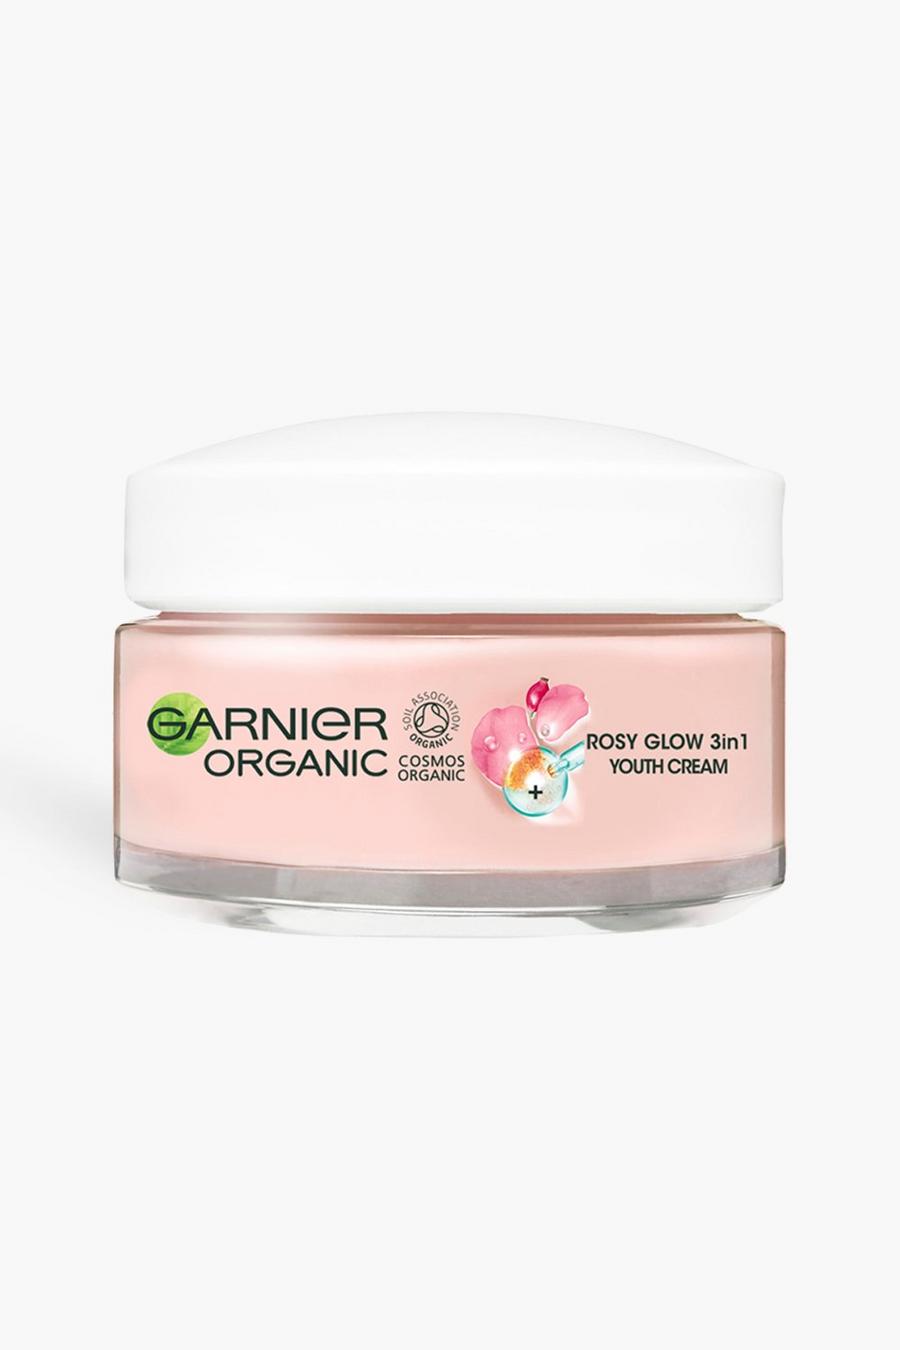 Rose Garnier Organic Rosy Glow 3in1 Youth Cream